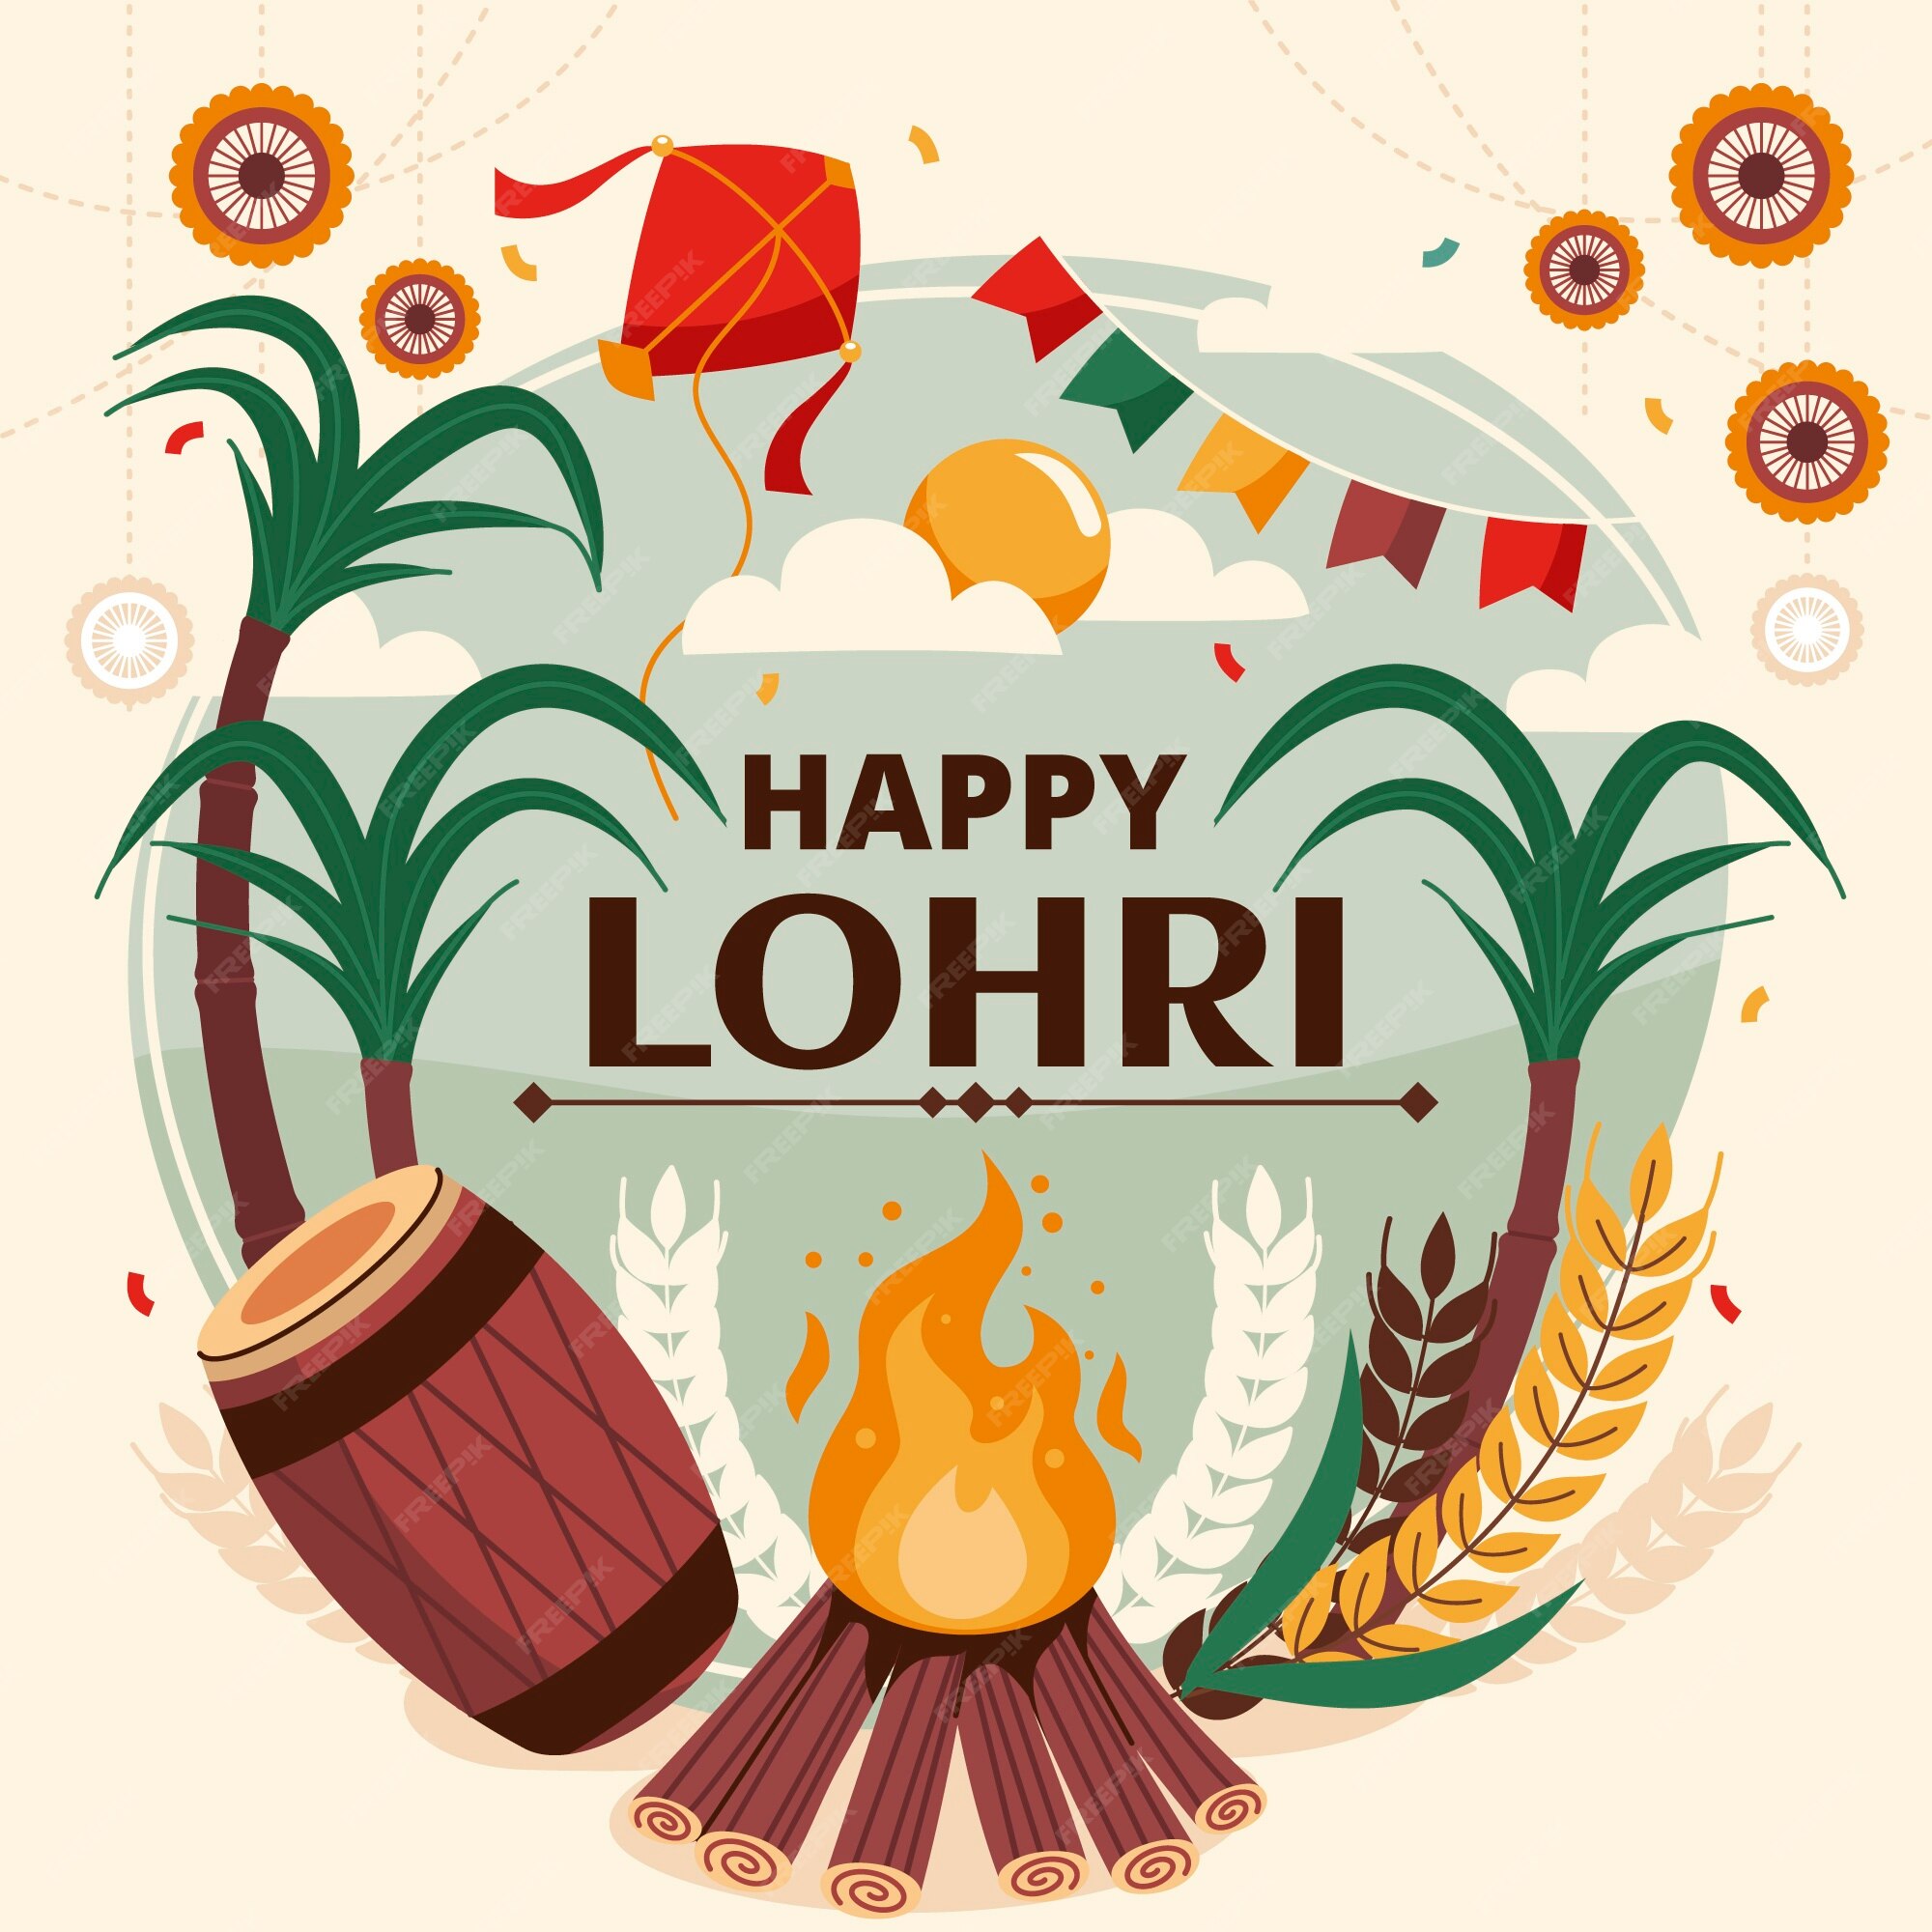 Happy Lohri Images - Free Download on Freepik